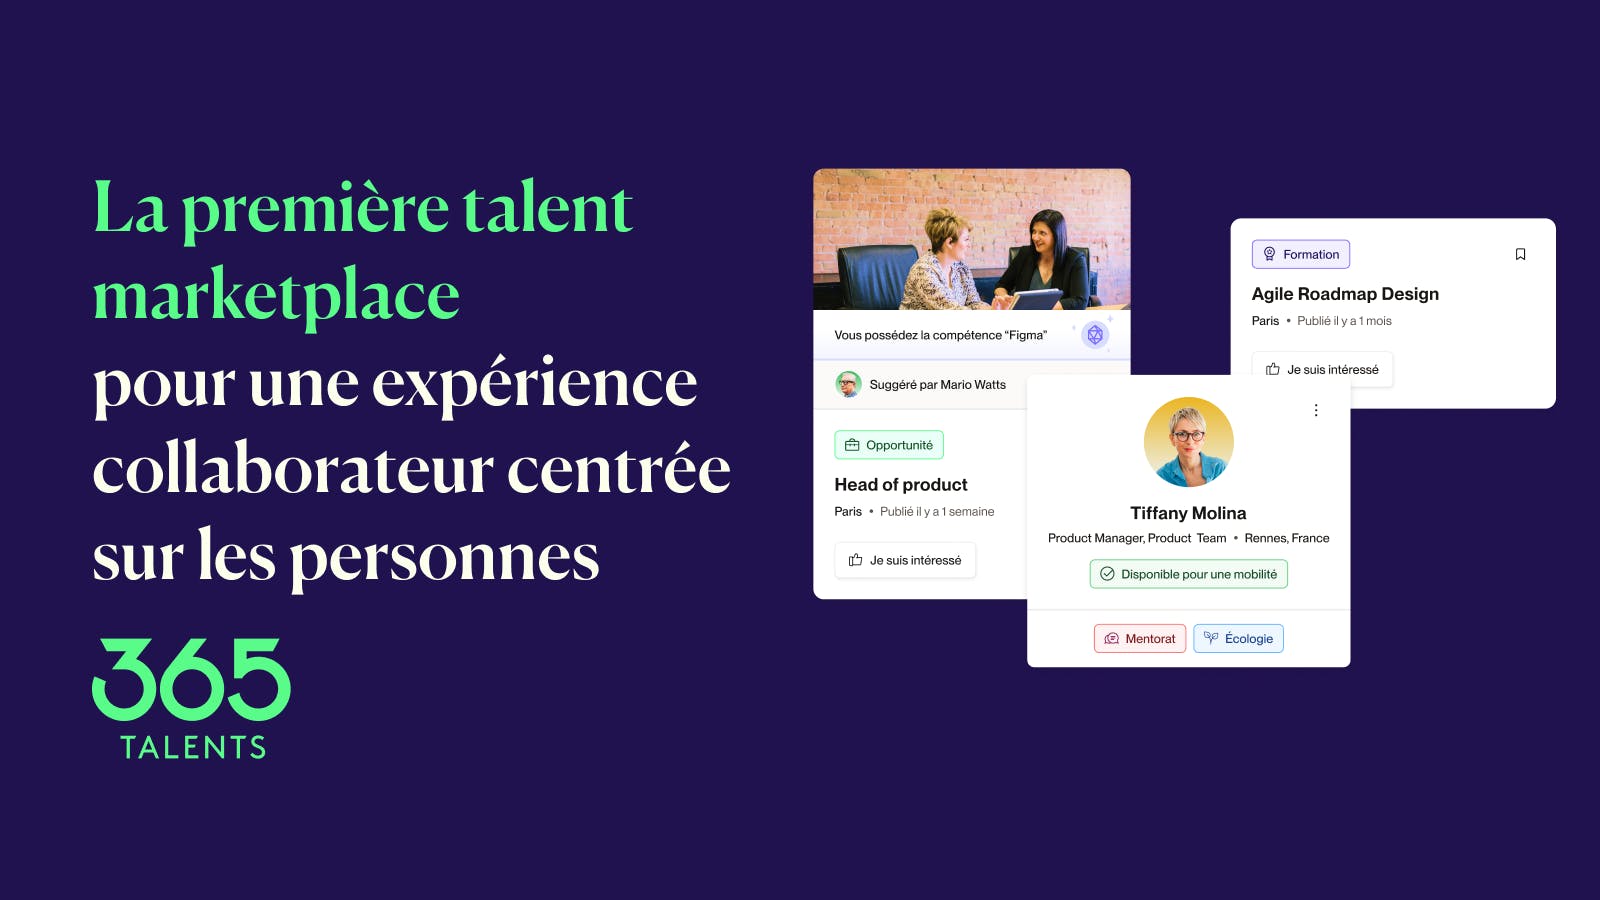 talent marketplace